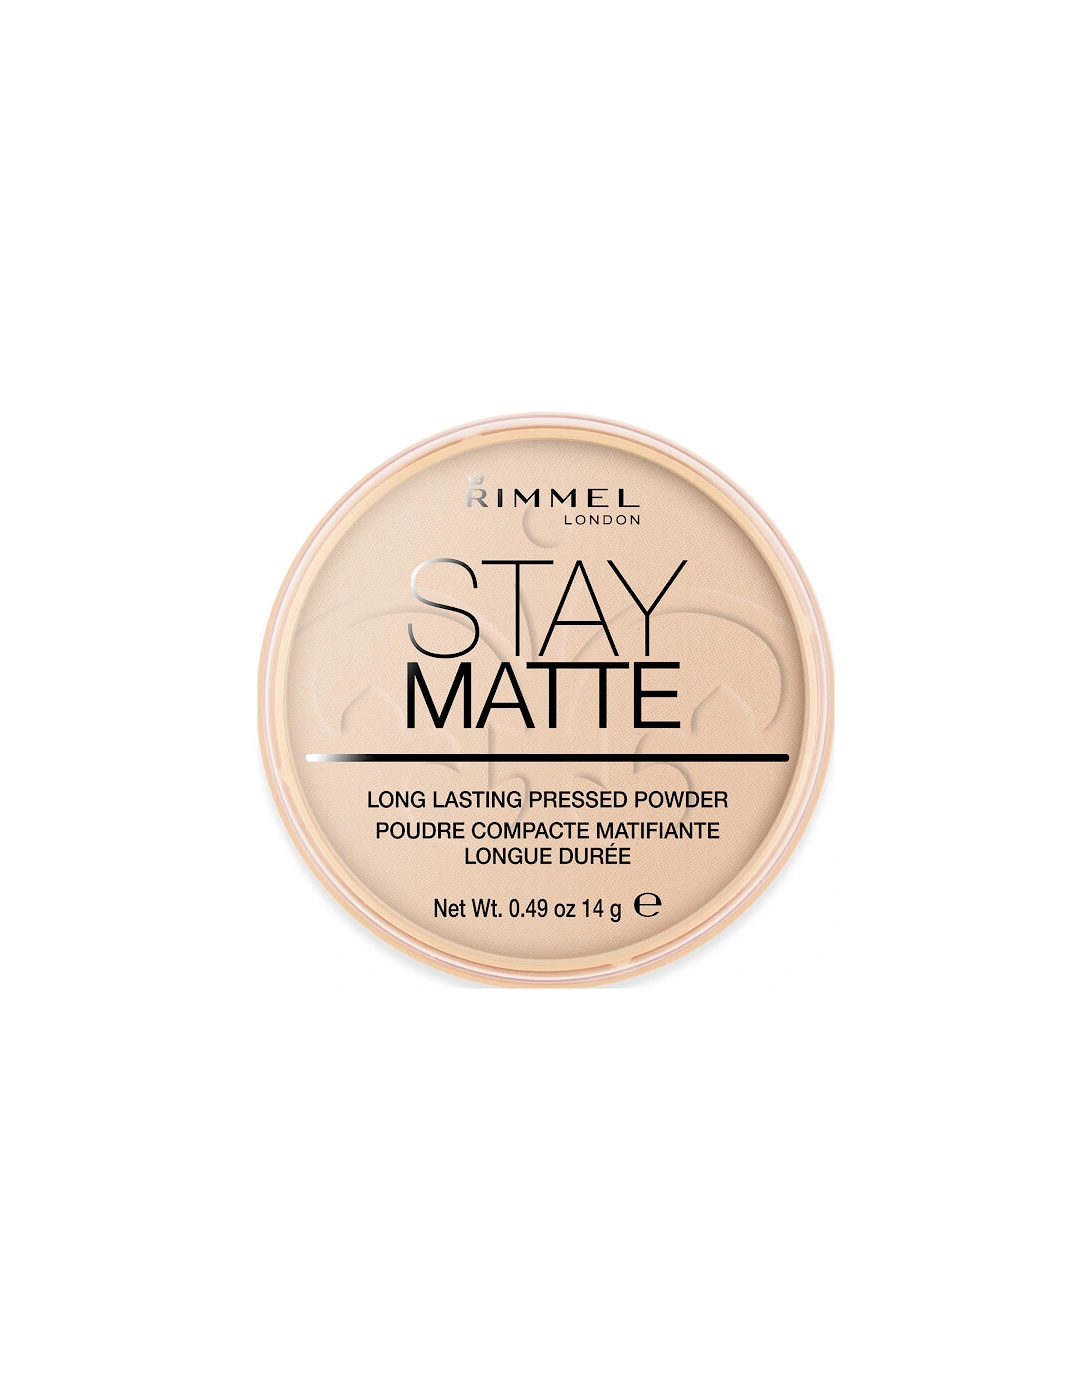 Stay Matte Pressed Powder - Peach Glow, 2 of 1